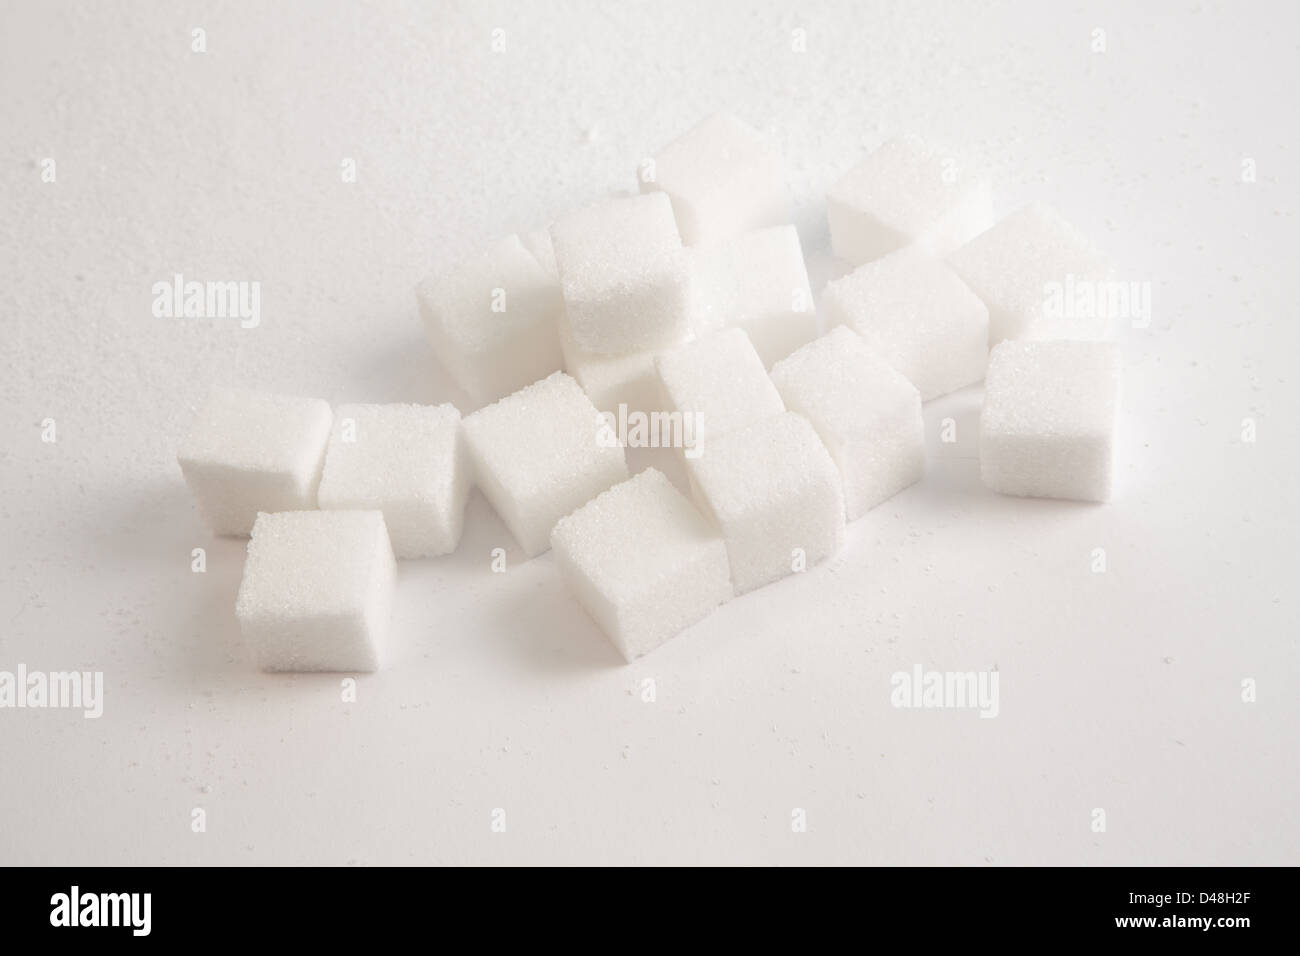 Pile of sugar lumps Stock Photo - Alamy